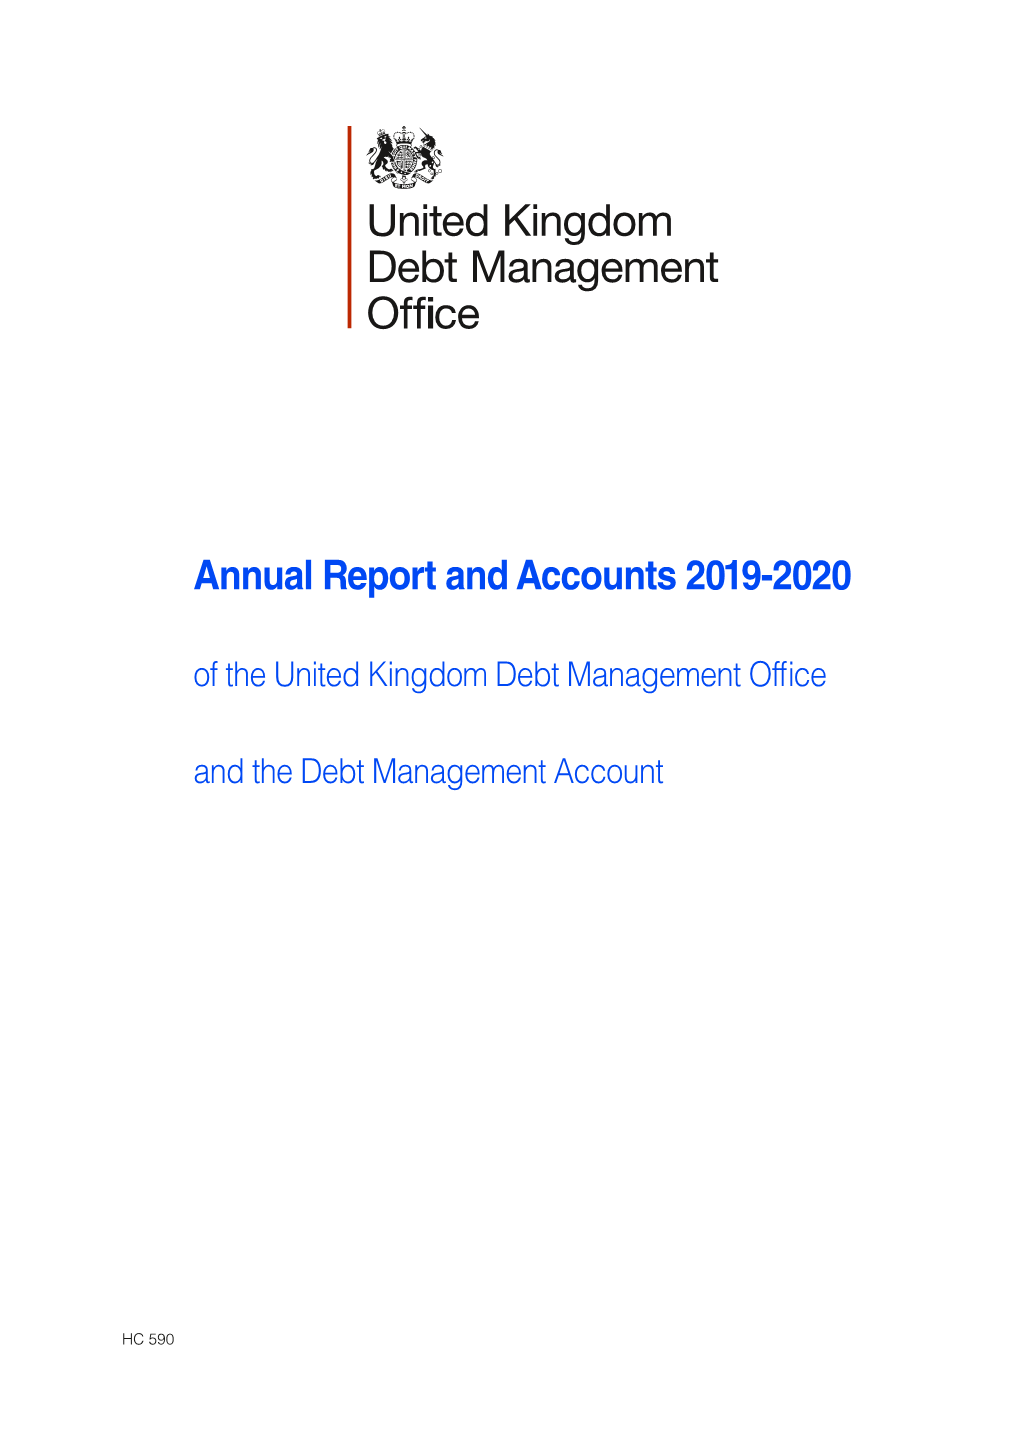 HC 590 – United Kingdom Debt Management Office – Annual